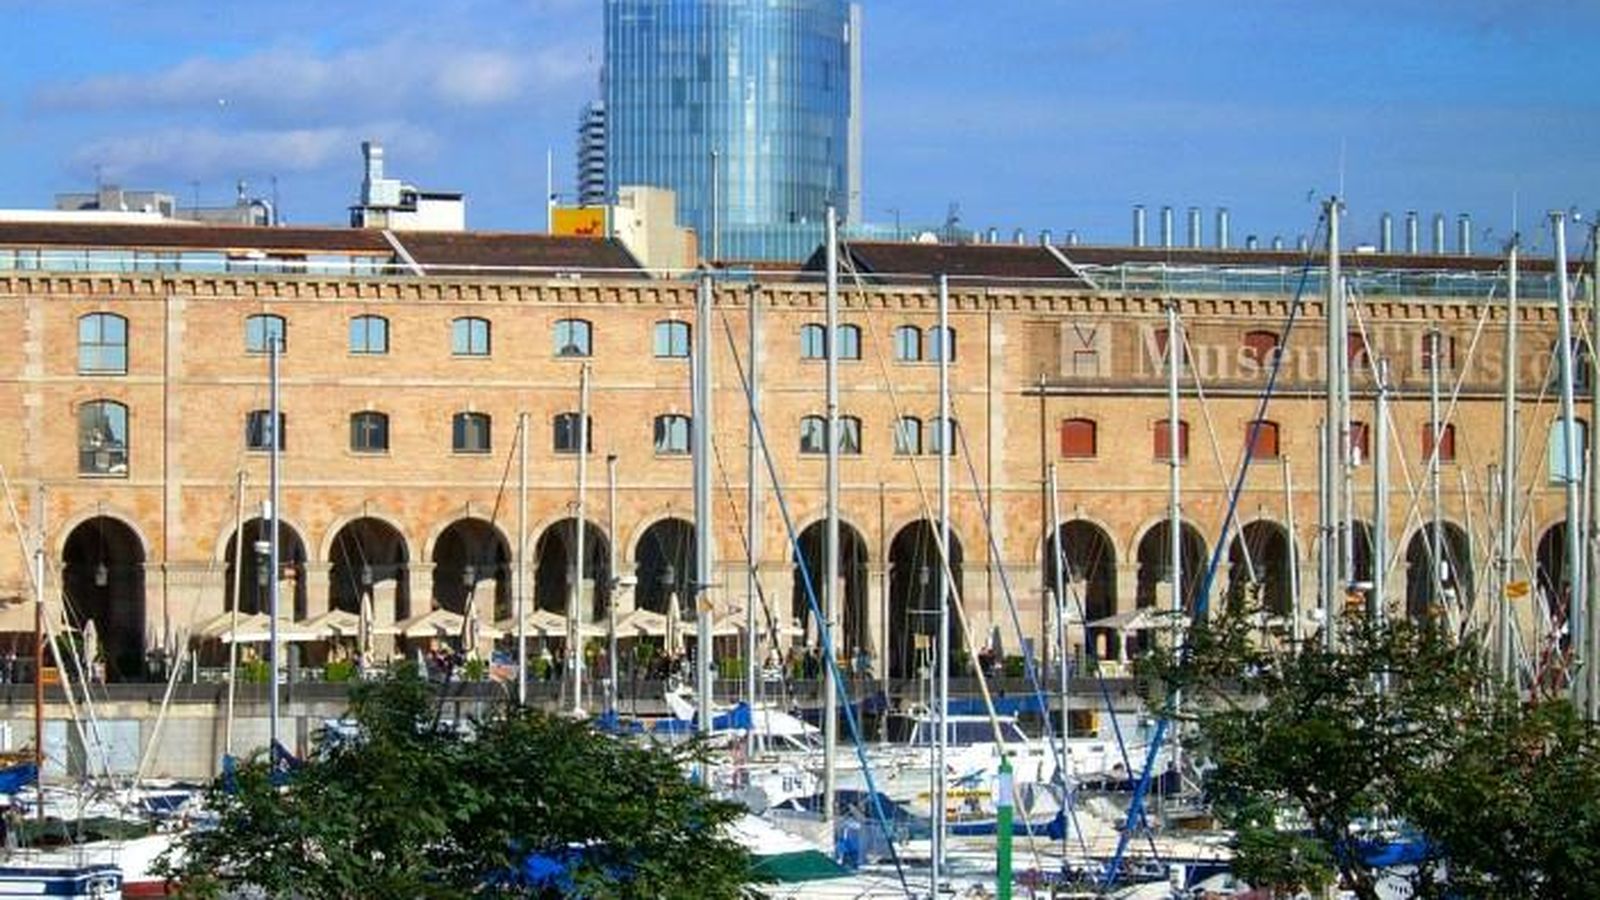 Foto: El edificio del Palau de Mar, en el Port Vell barcelonés. (Foto: Oficinas Palau de Mar)